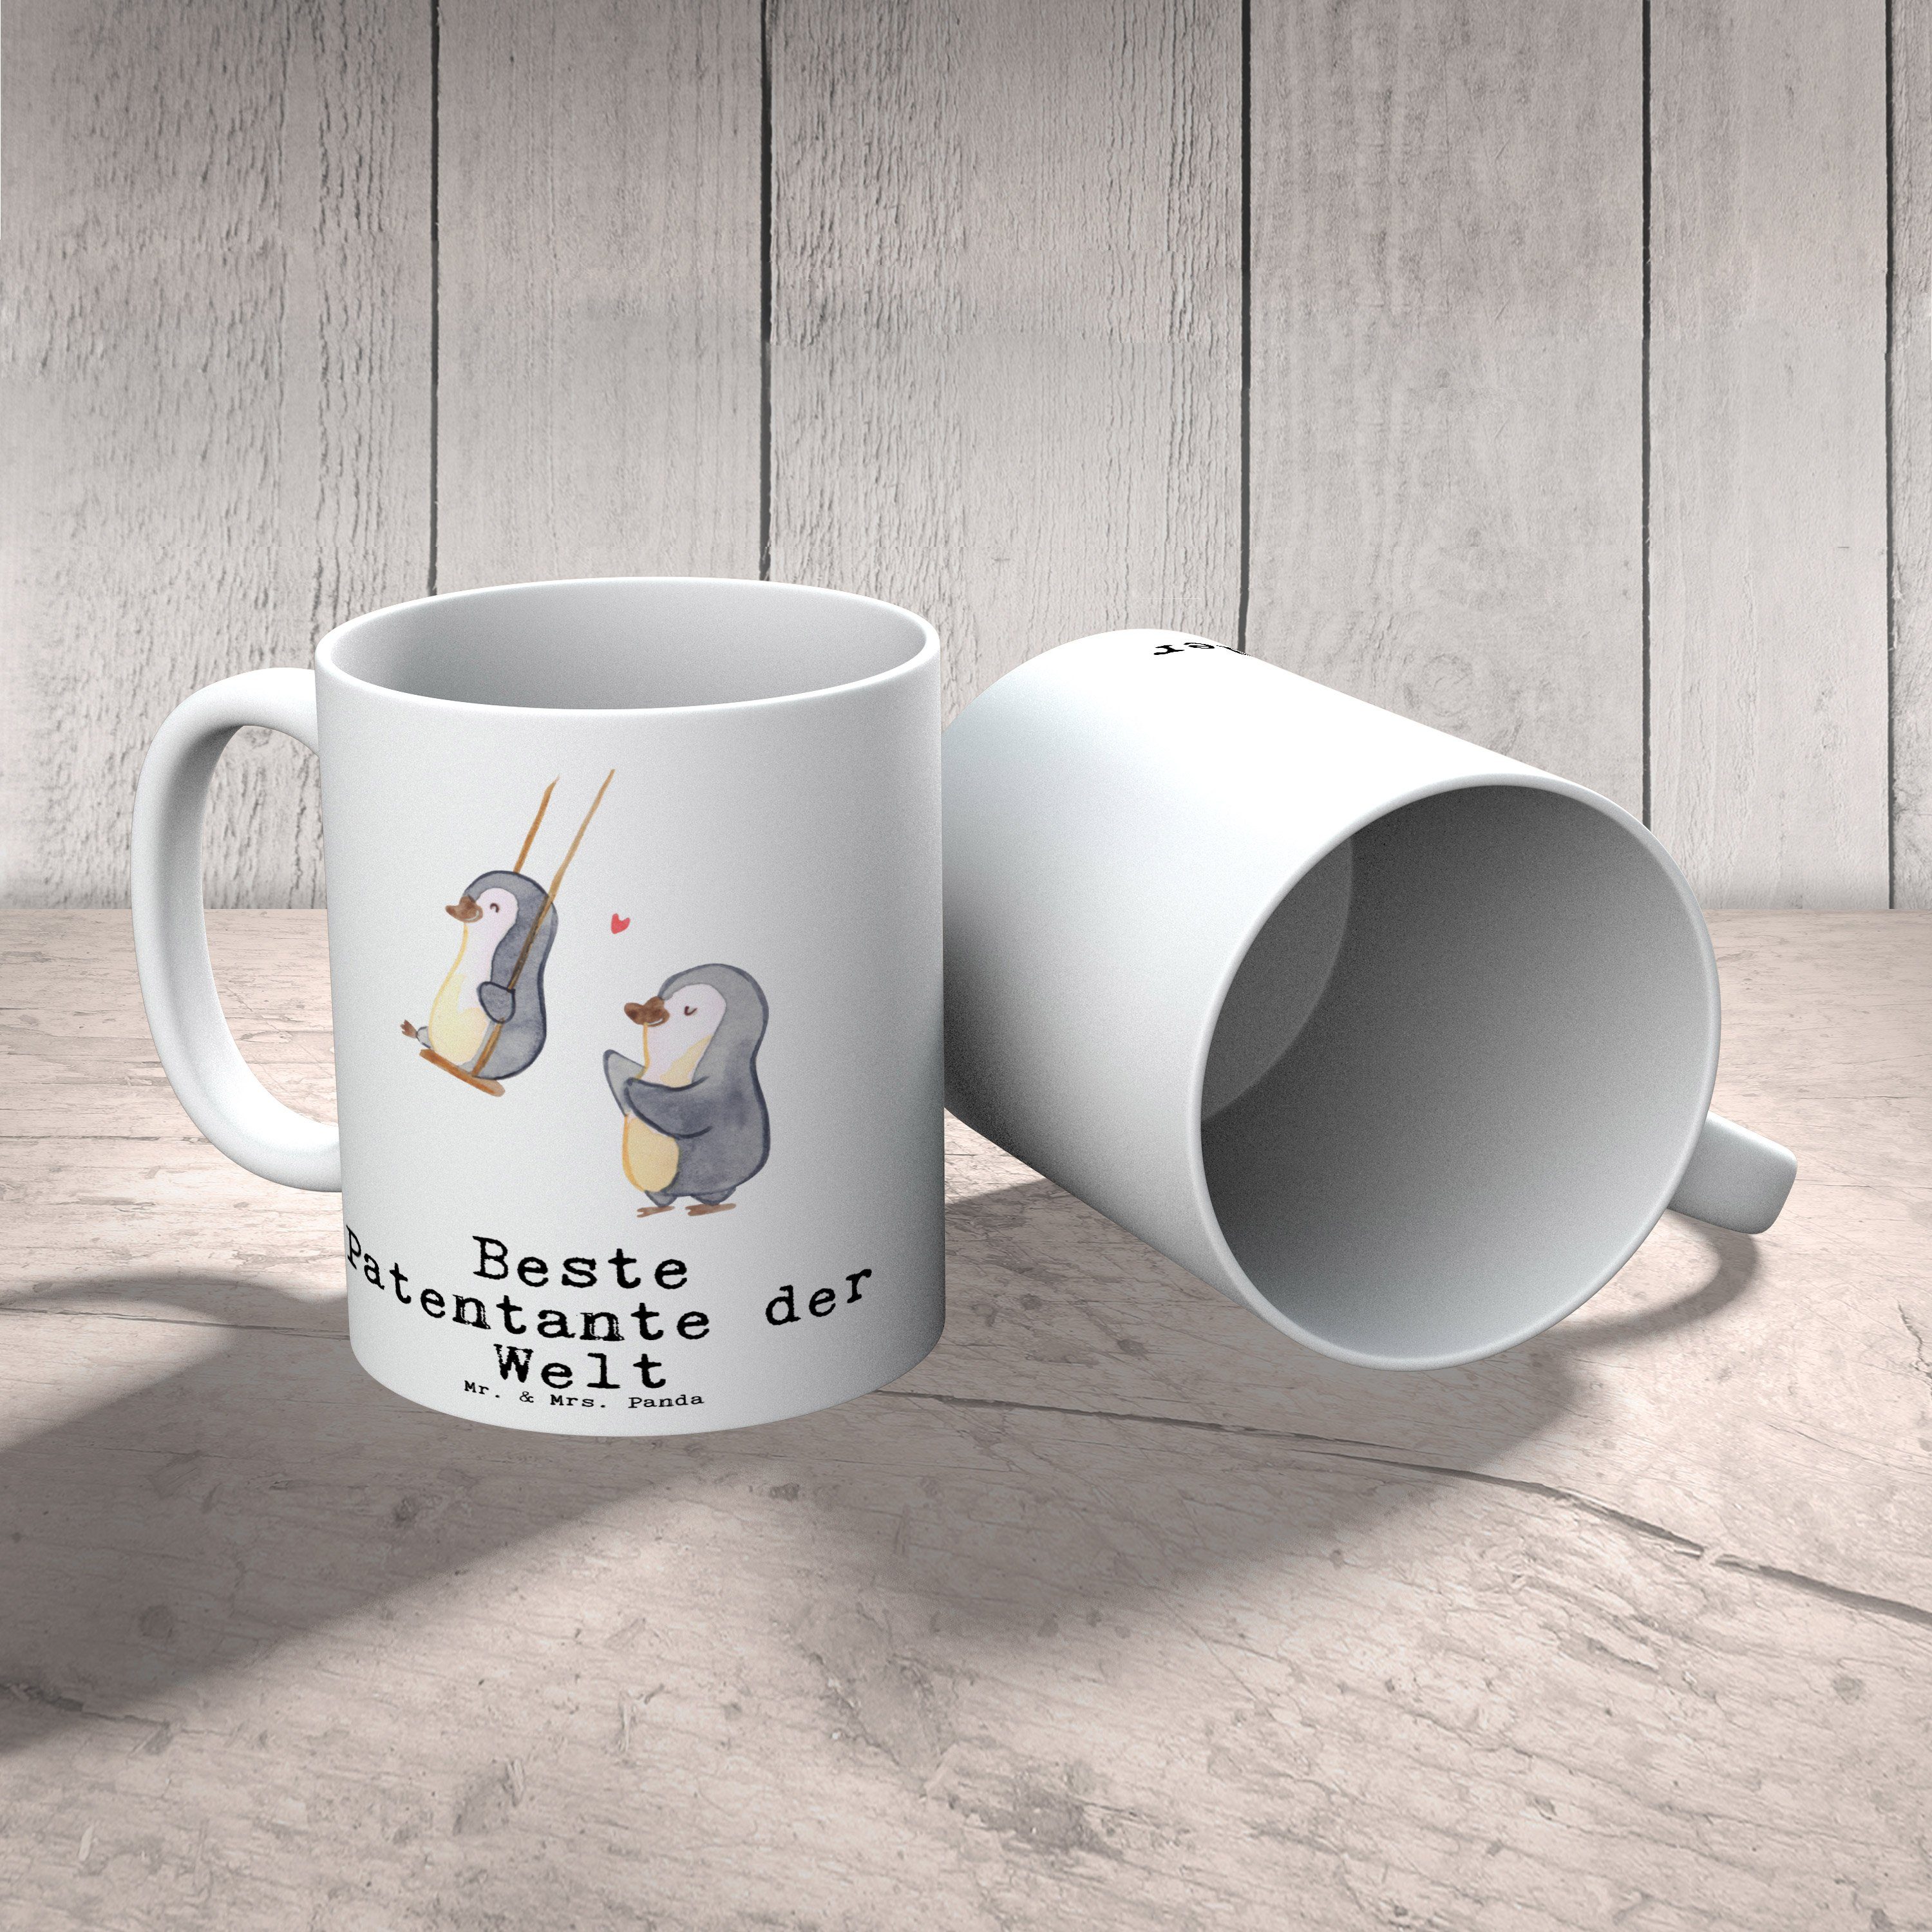 Kaffeebecher, Tante, Pinguin Panda Mrs. - Tasse Tee, Paten Büro, Welt Weiß der & Geschenk, Mr. Patentante Beste - Taufpartner, Dankeschön, Keramik Becher, Mitbringsel, Kaffeetasse,